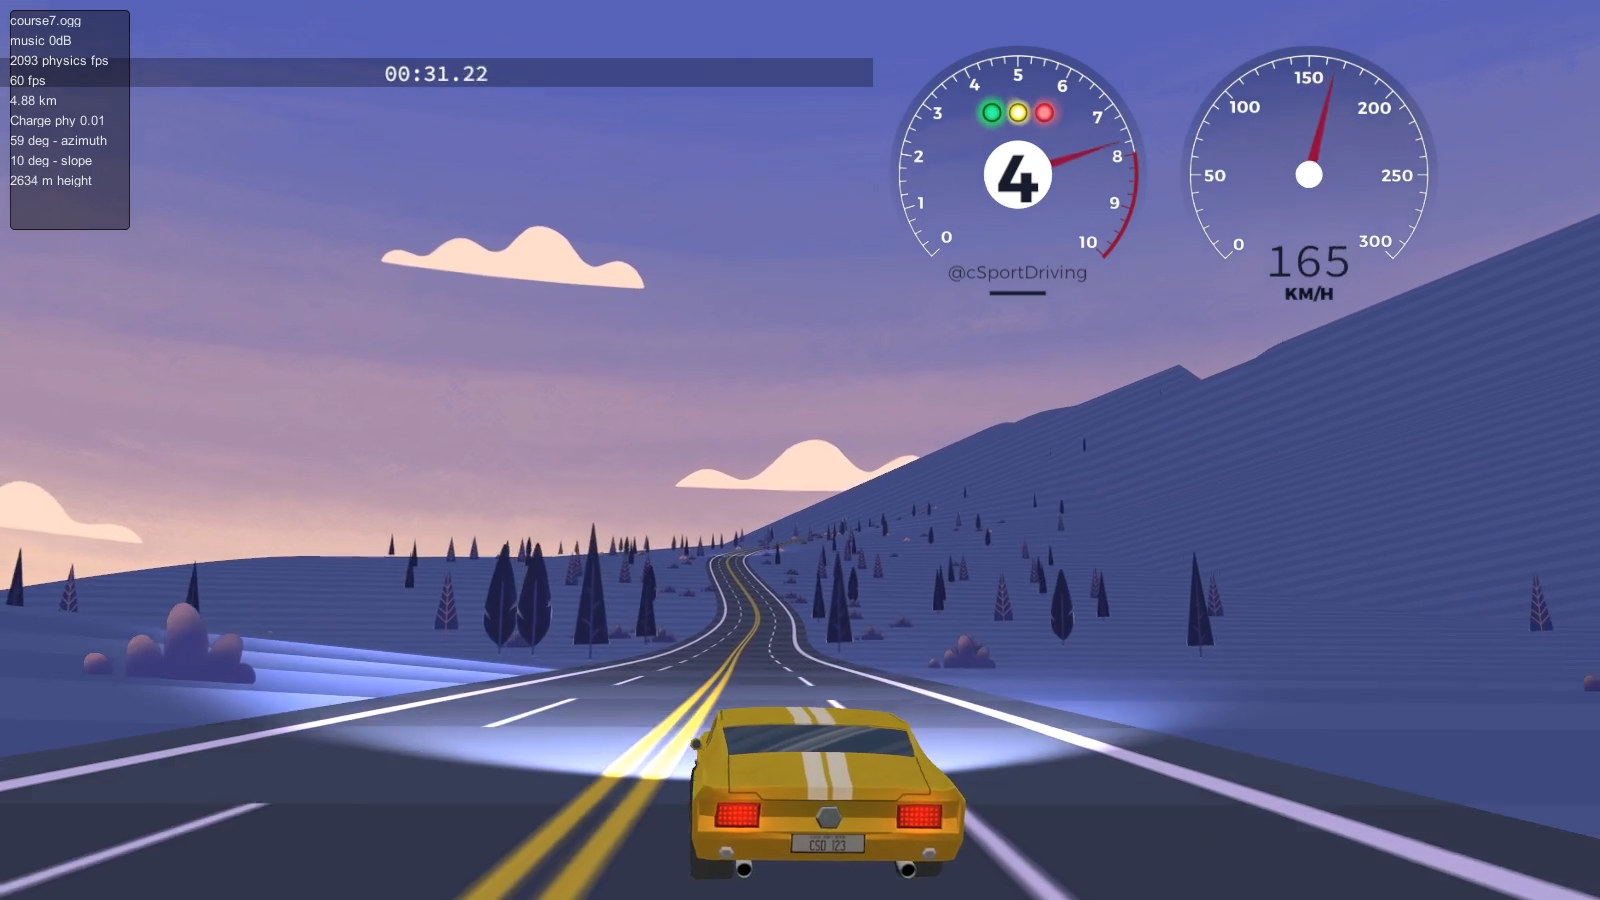 Classic sport driving screenshot 6 7